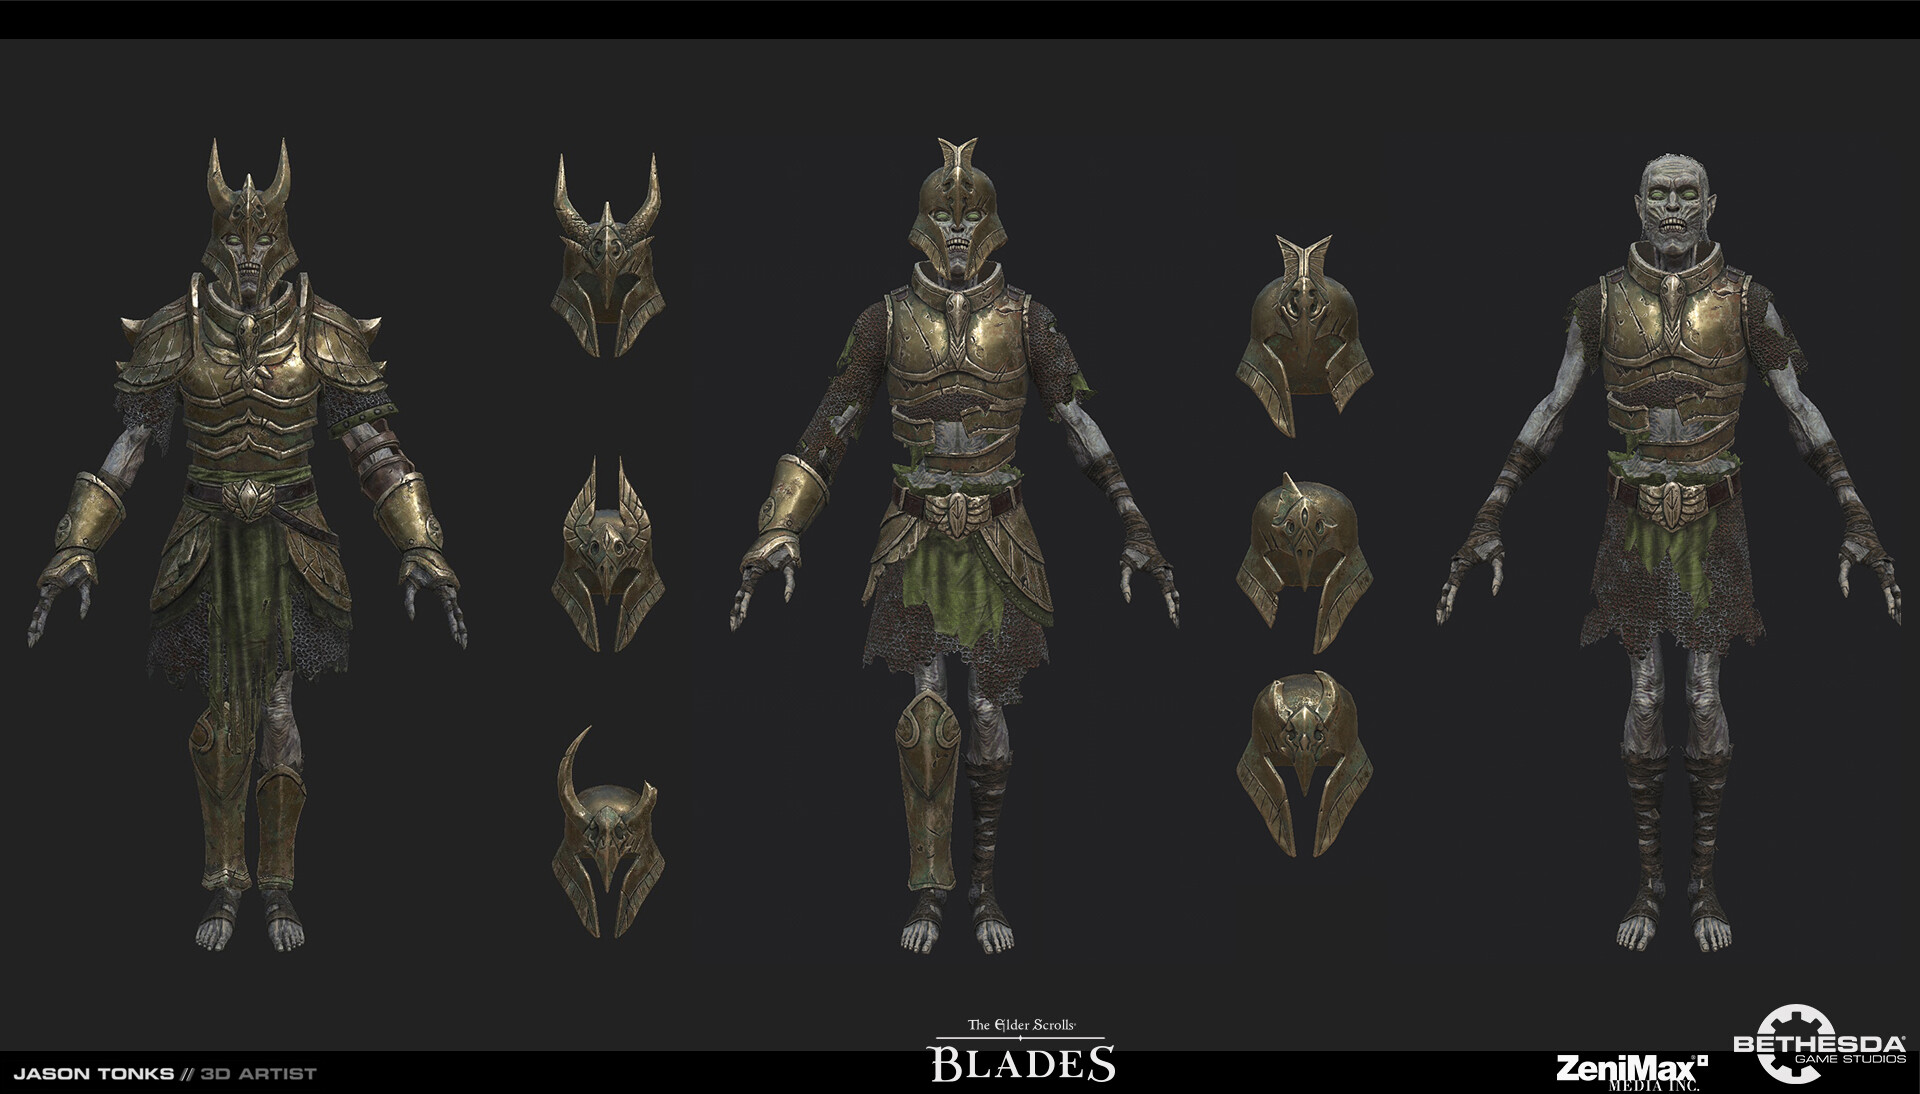 Jason Tonks - The Elder Scrolls: Blades